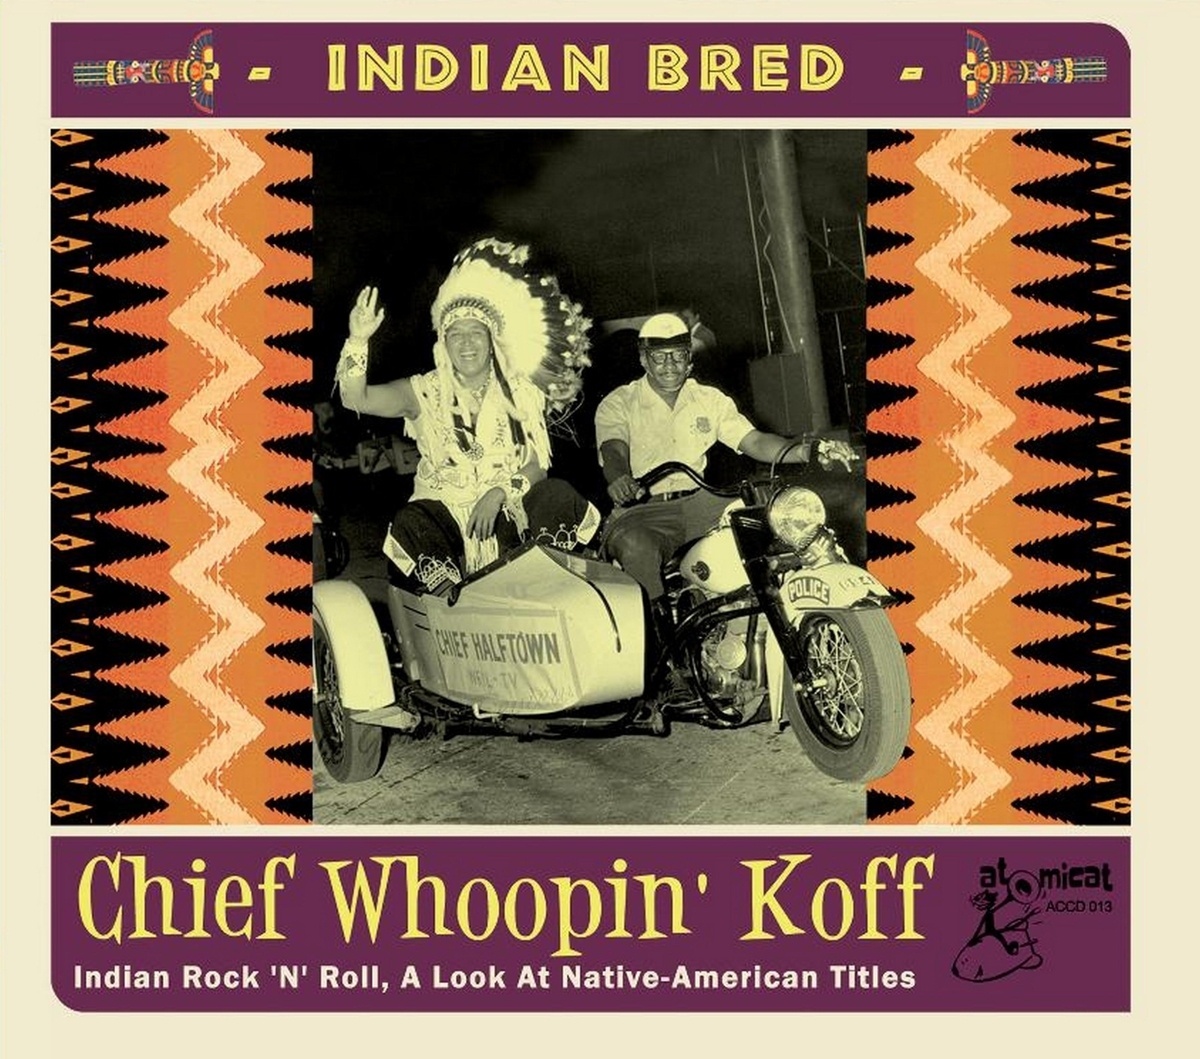 Indian Bred-Chief Whoopin' Koff - Various. (CD)